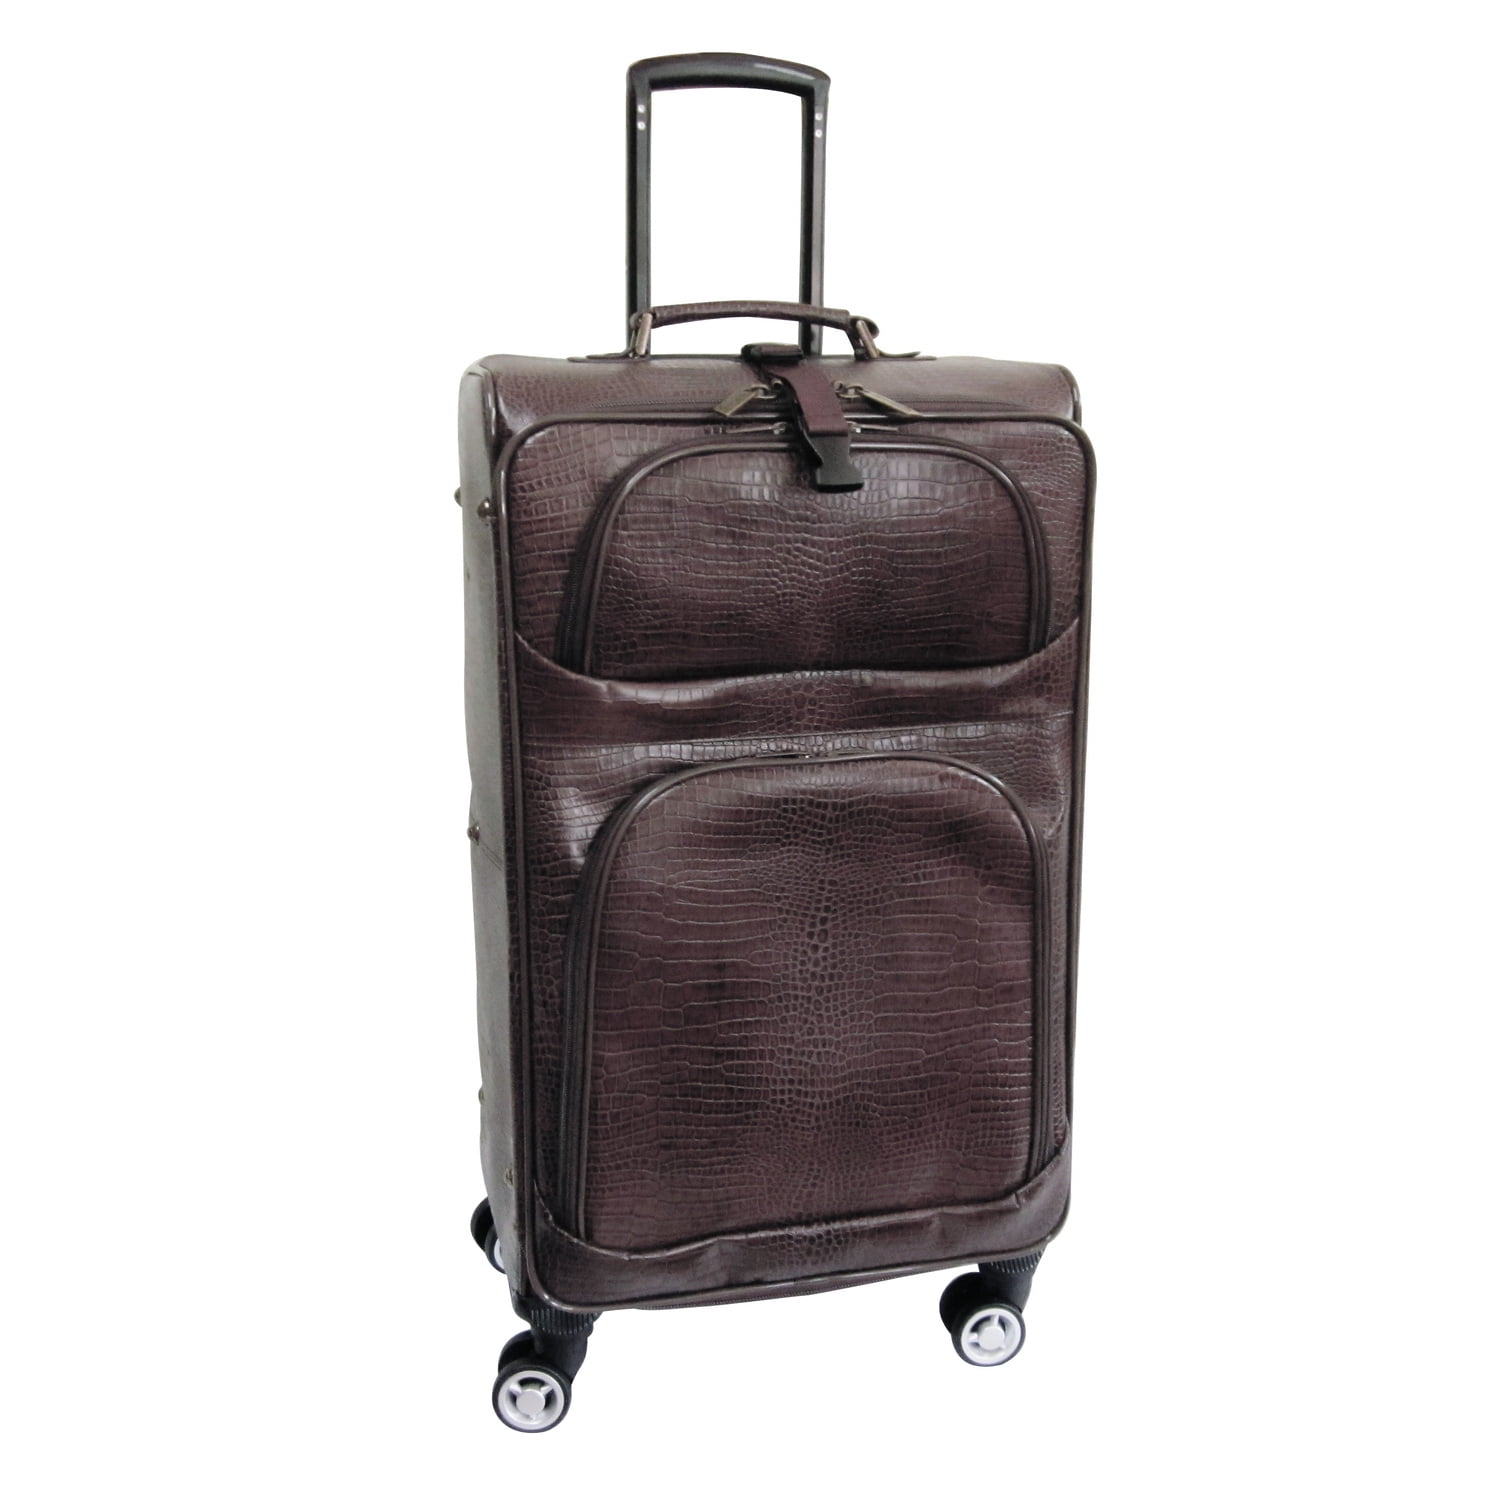 Amerileather Dk Brown Leather Croco-Print Luggage on Spinner Wheels ...